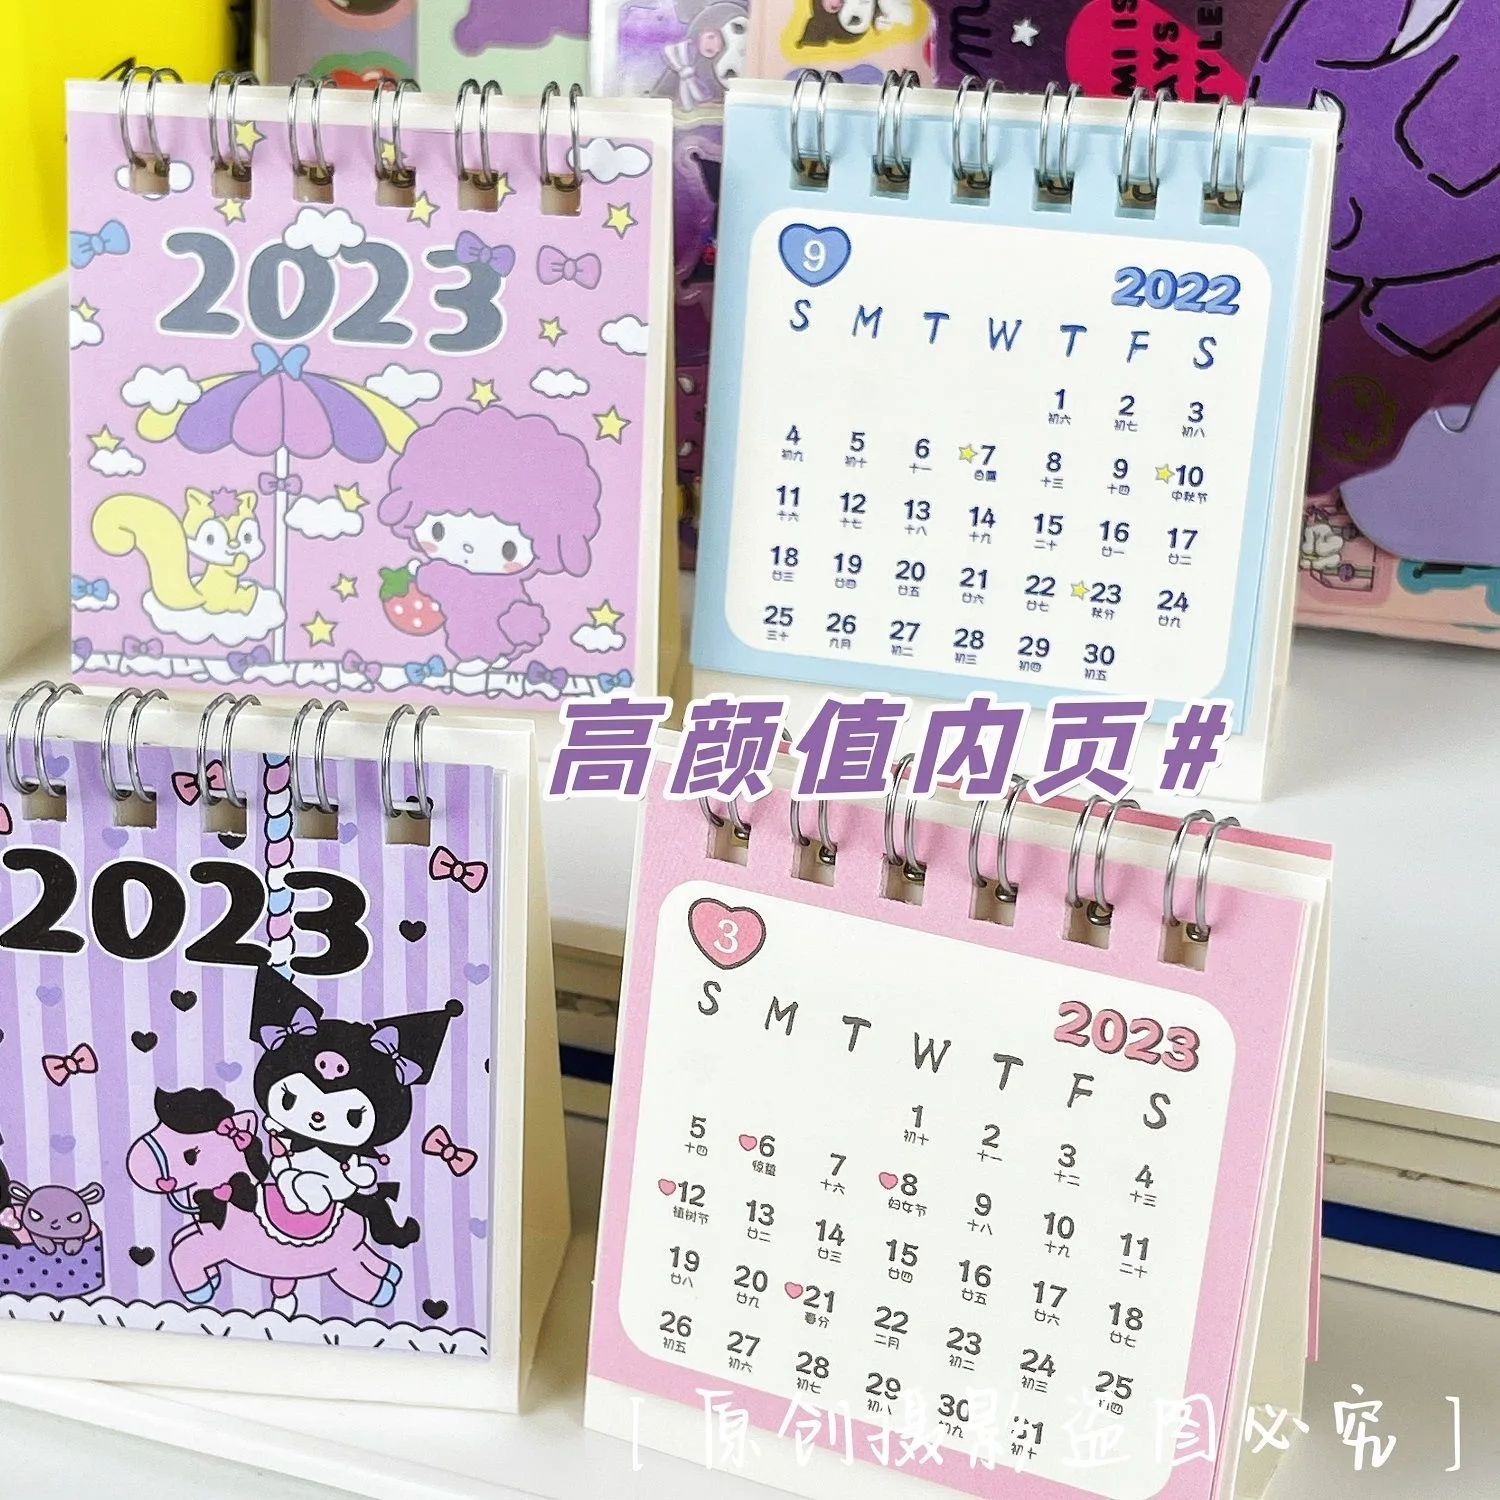 Sanurgente-Mini calendrier de bureau Hello Kitty, décoration de